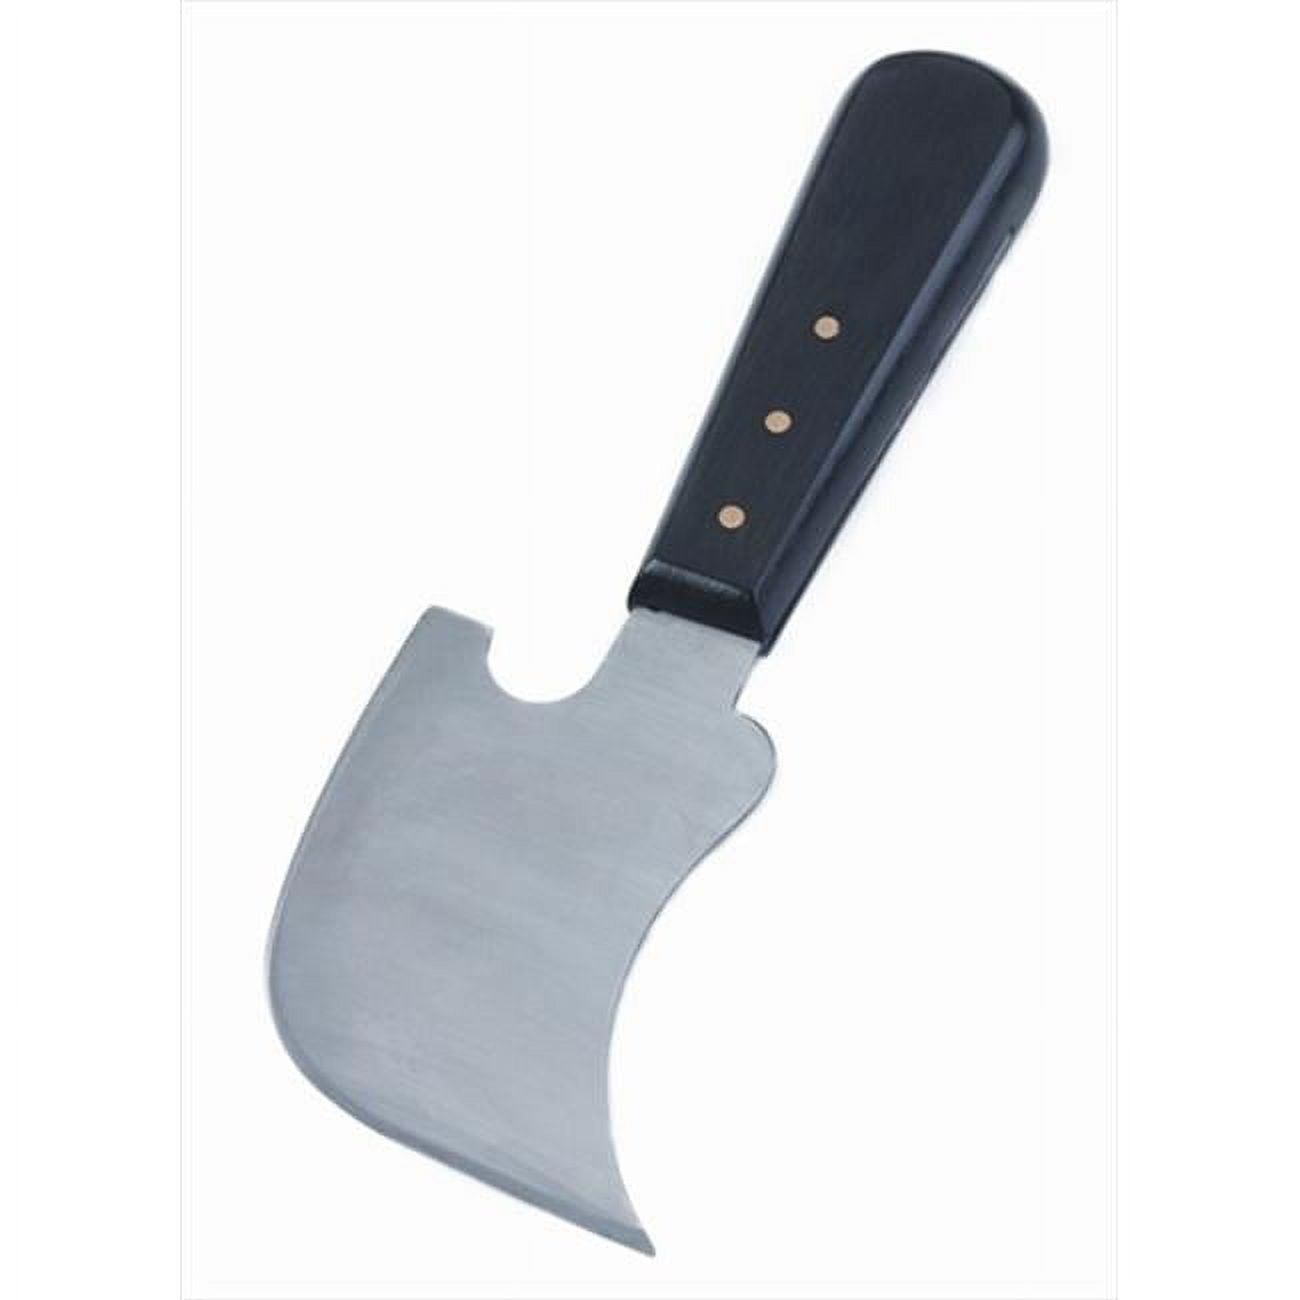 Tumbler Hob Knife Sharpener, Kitchen Knife Provides 15-20 Degree